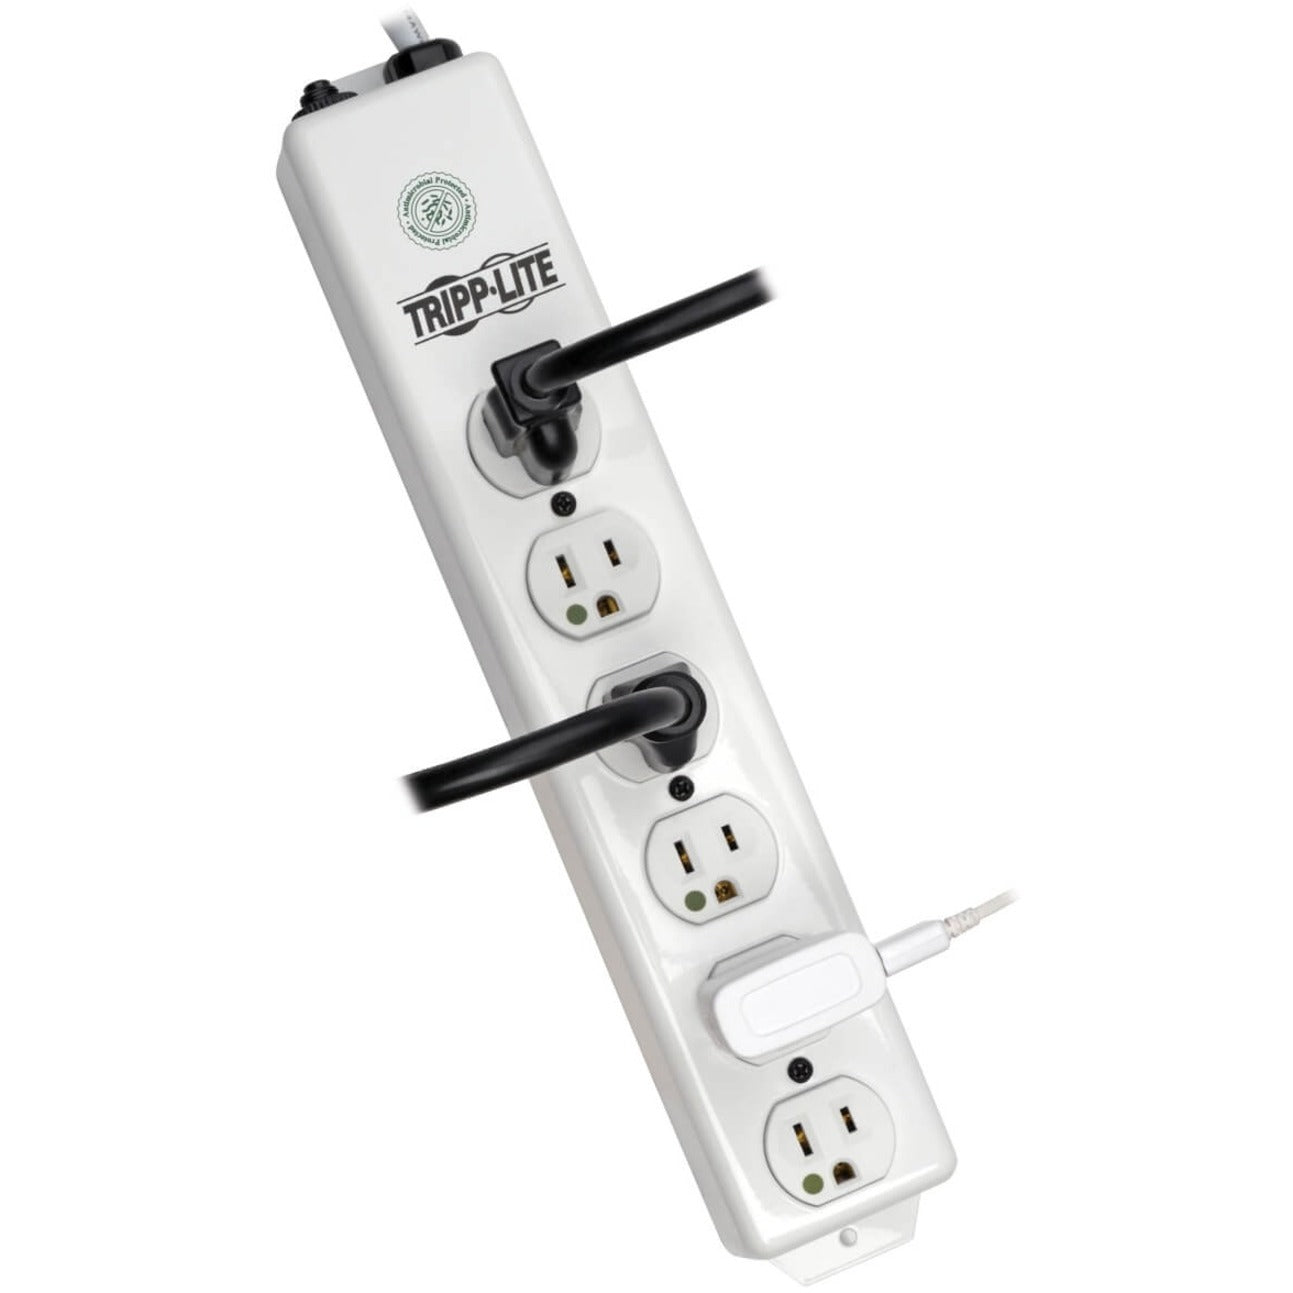 Tripp Lite PS-615-HG 6-Outlet Power Strip, Hospital Grade Plug, 15 ft. Cord